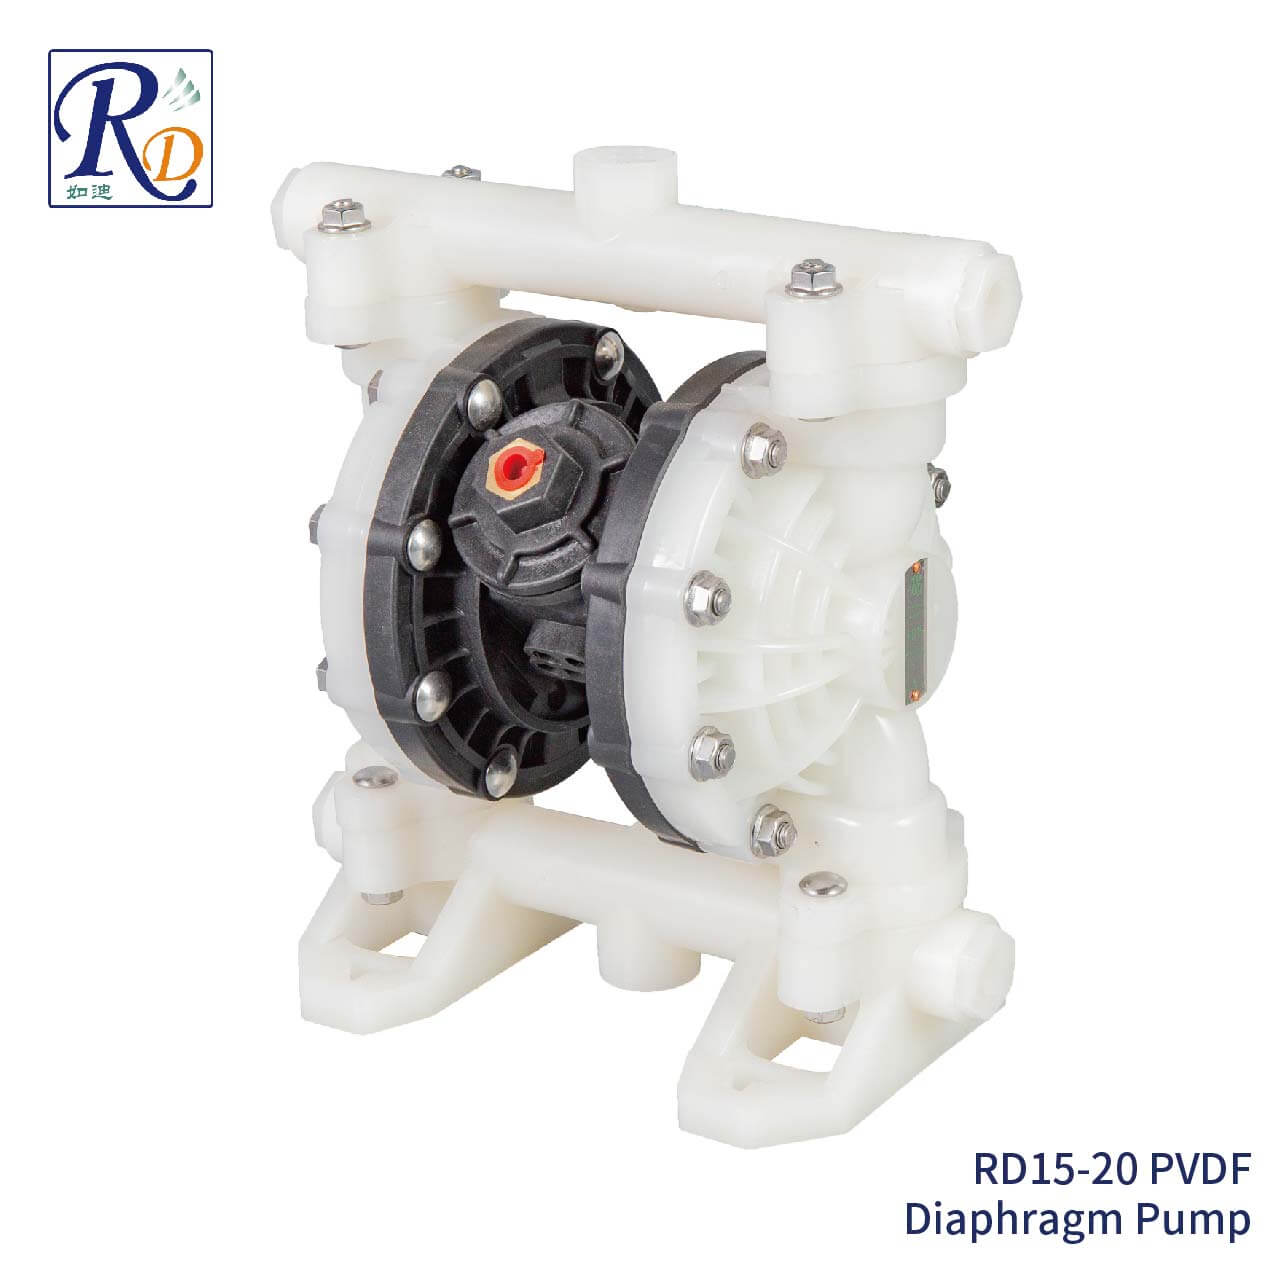 RD15-20 PVDF Diaphragm Pump